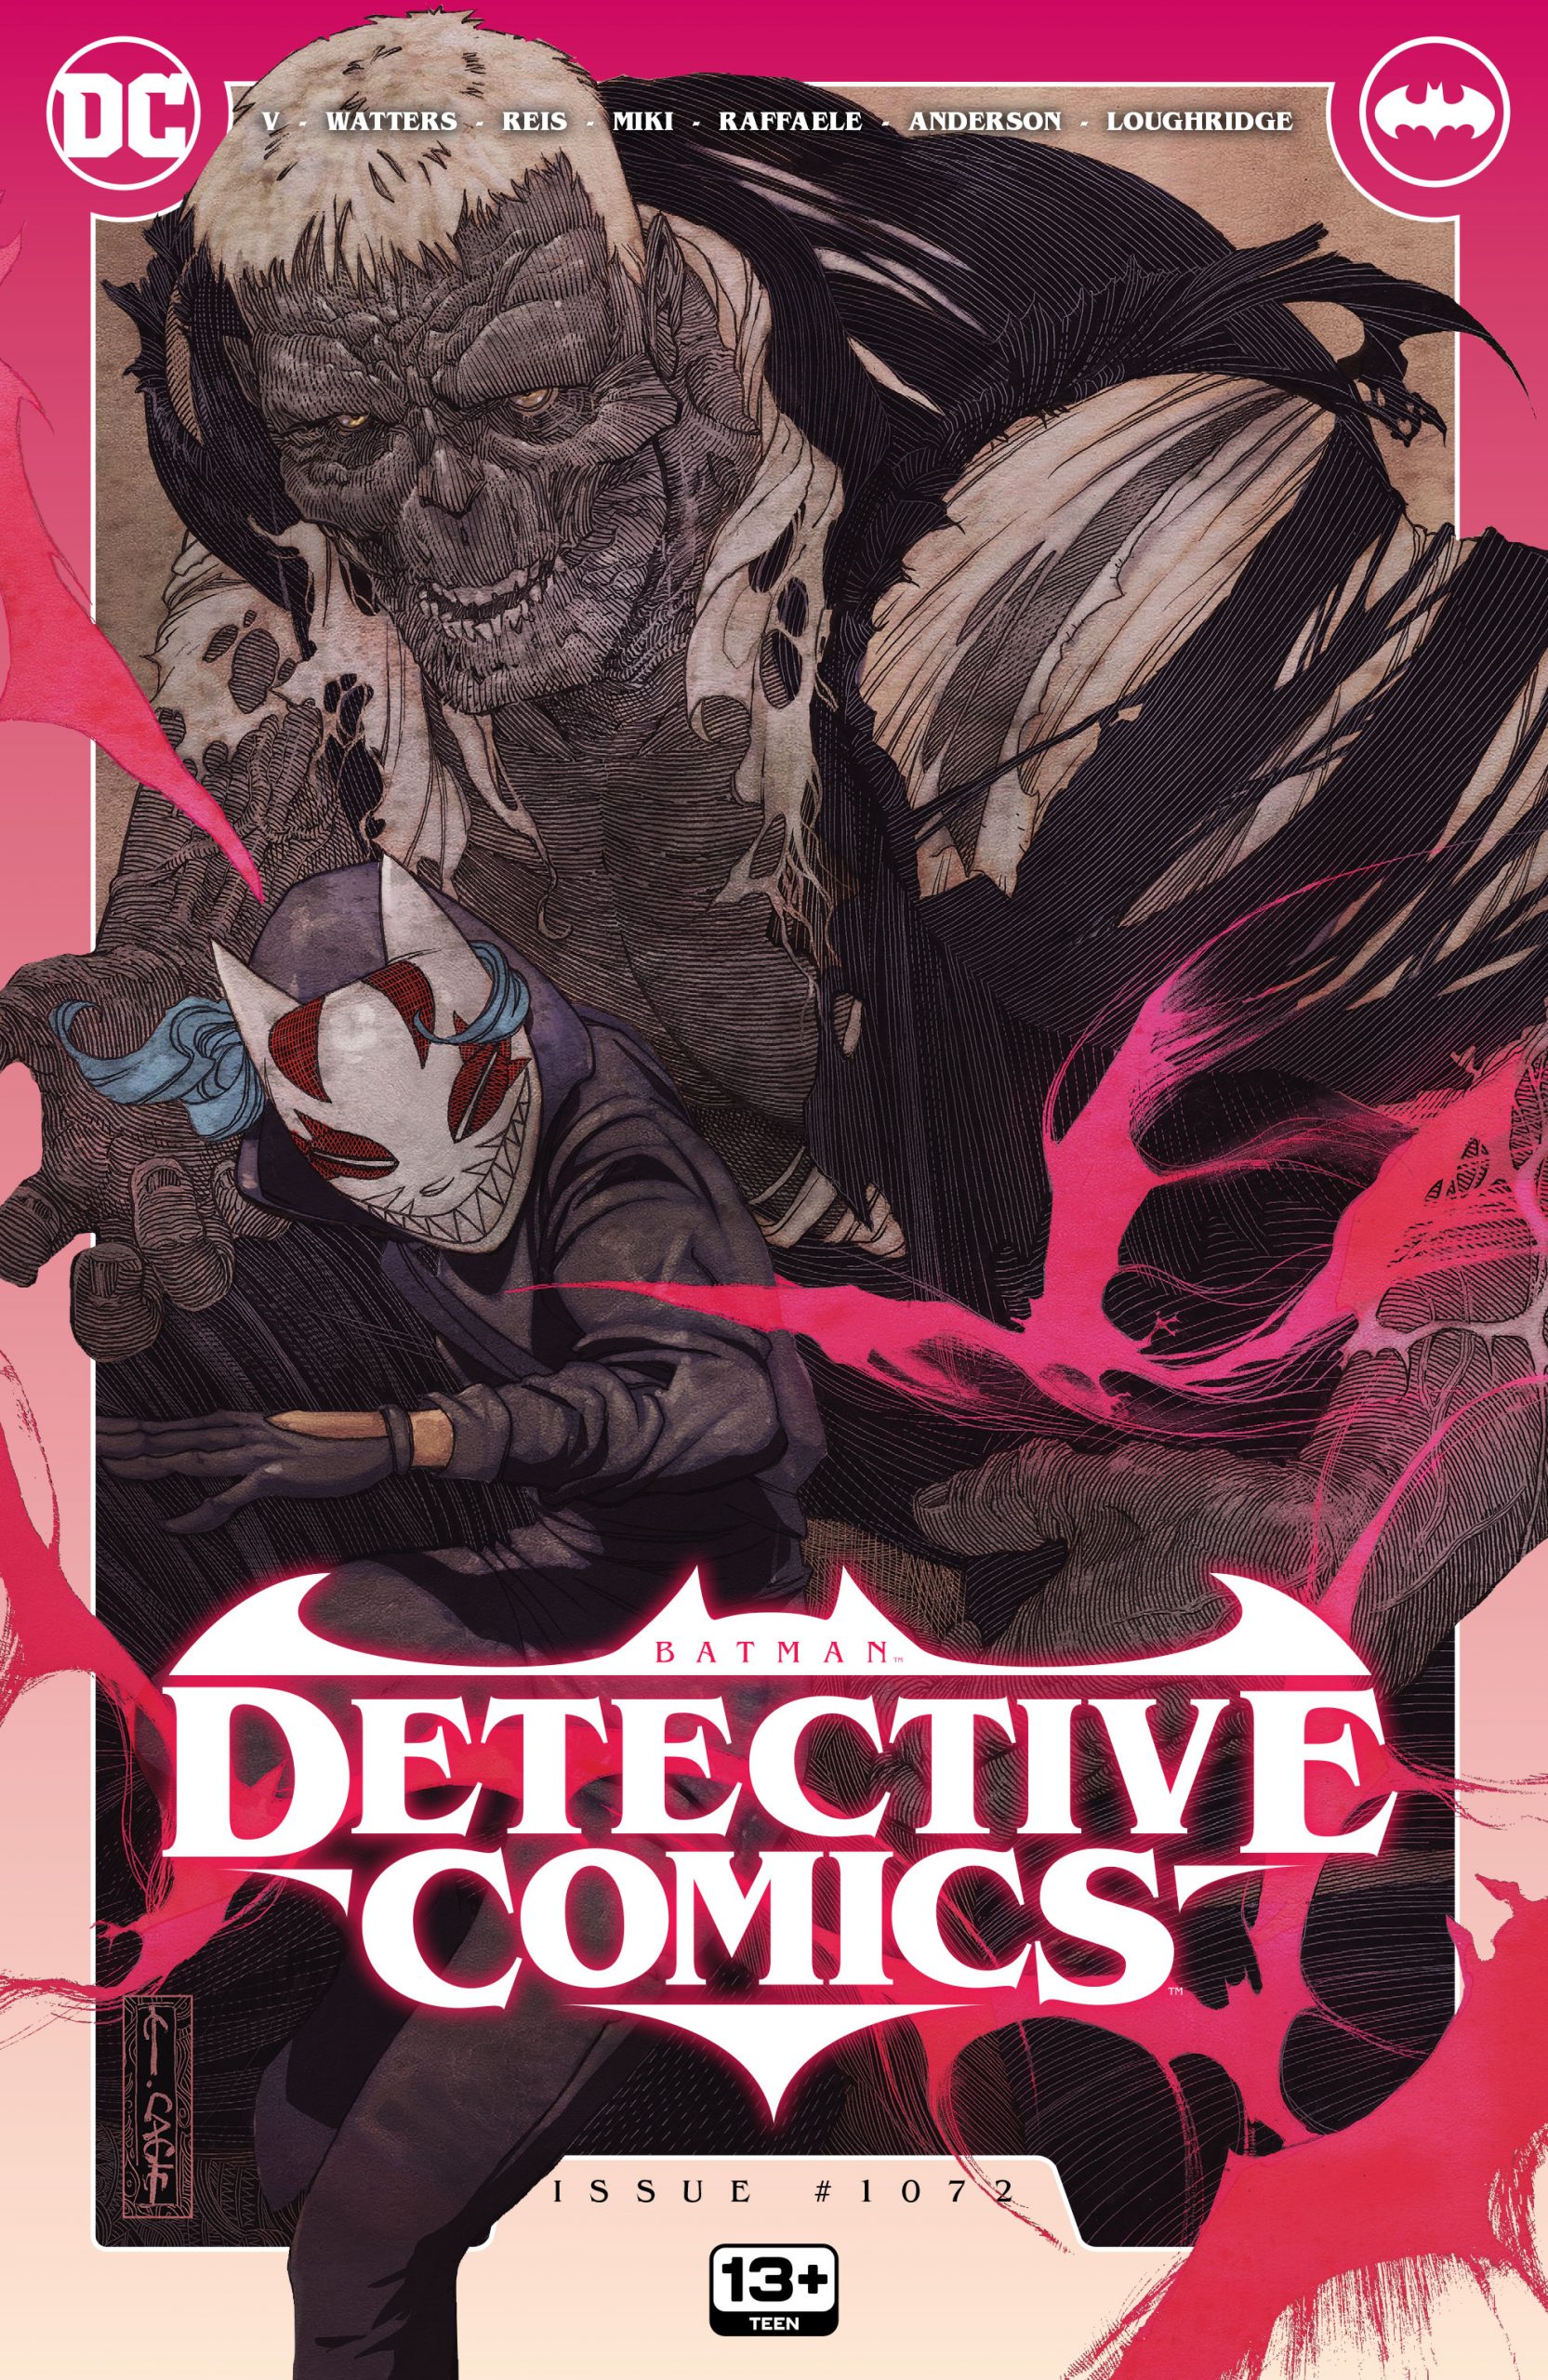 DC Preview: Detective Comics #1072